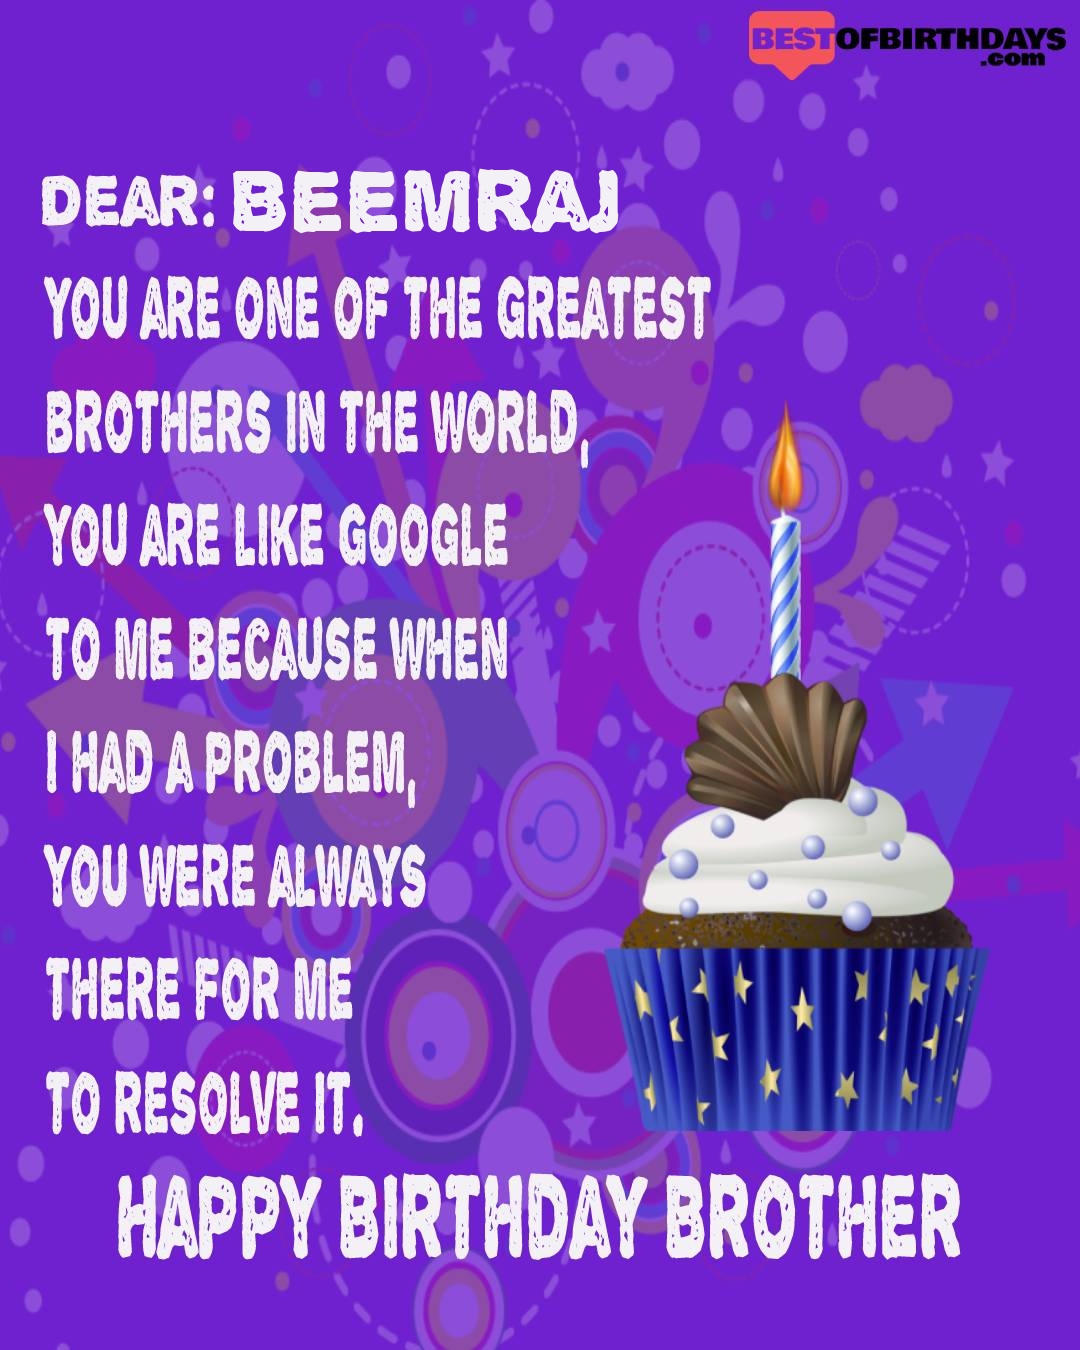 Happy birthday beemraj bhai brother bro